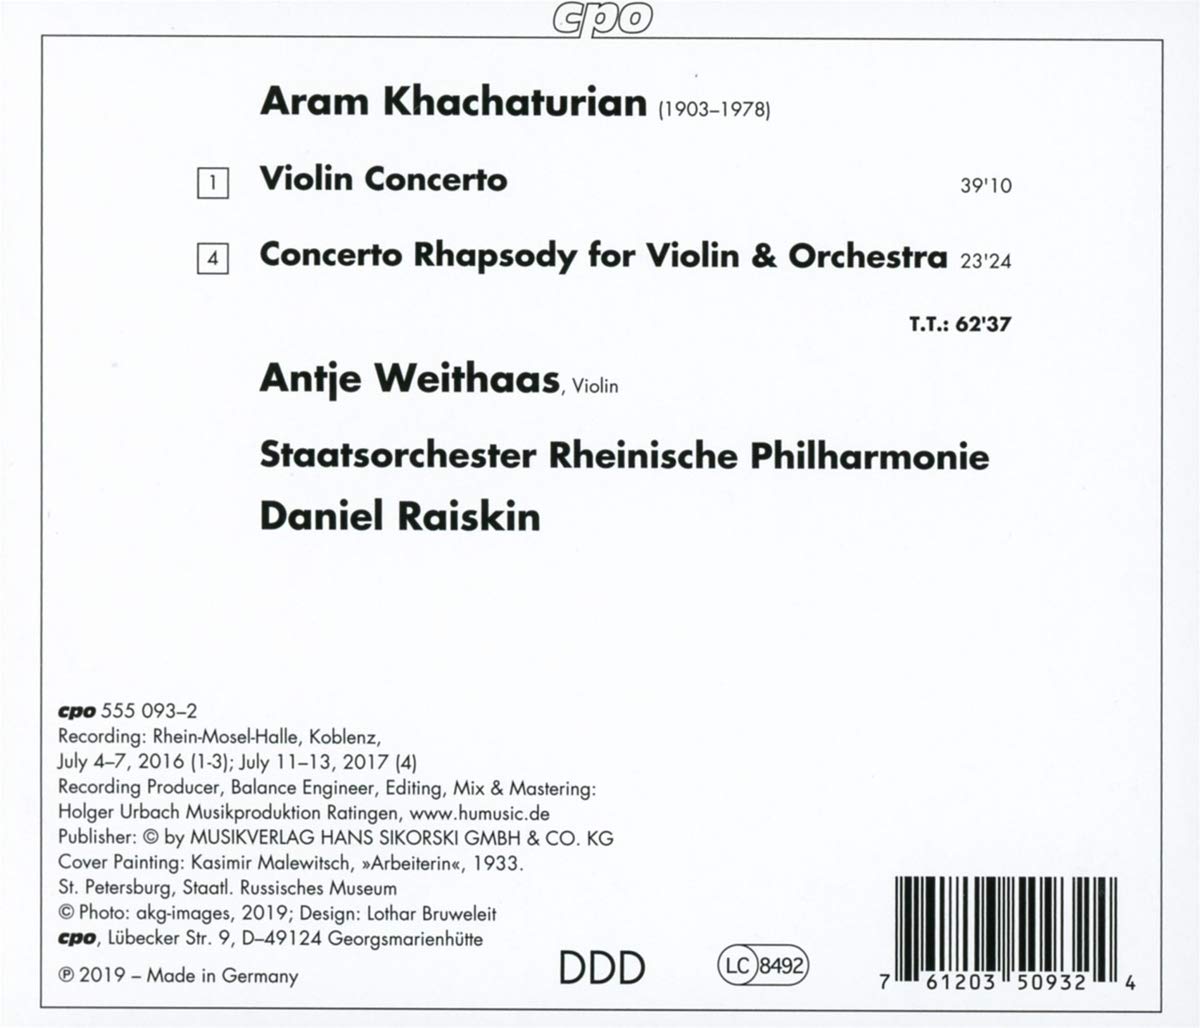 Antje Weithaas 아람 하차투리안: 바이올린 협주곡, 파가니니 광시곡 (Aram Khachaturian: Violin Concerto, Concerto Rhapsody)